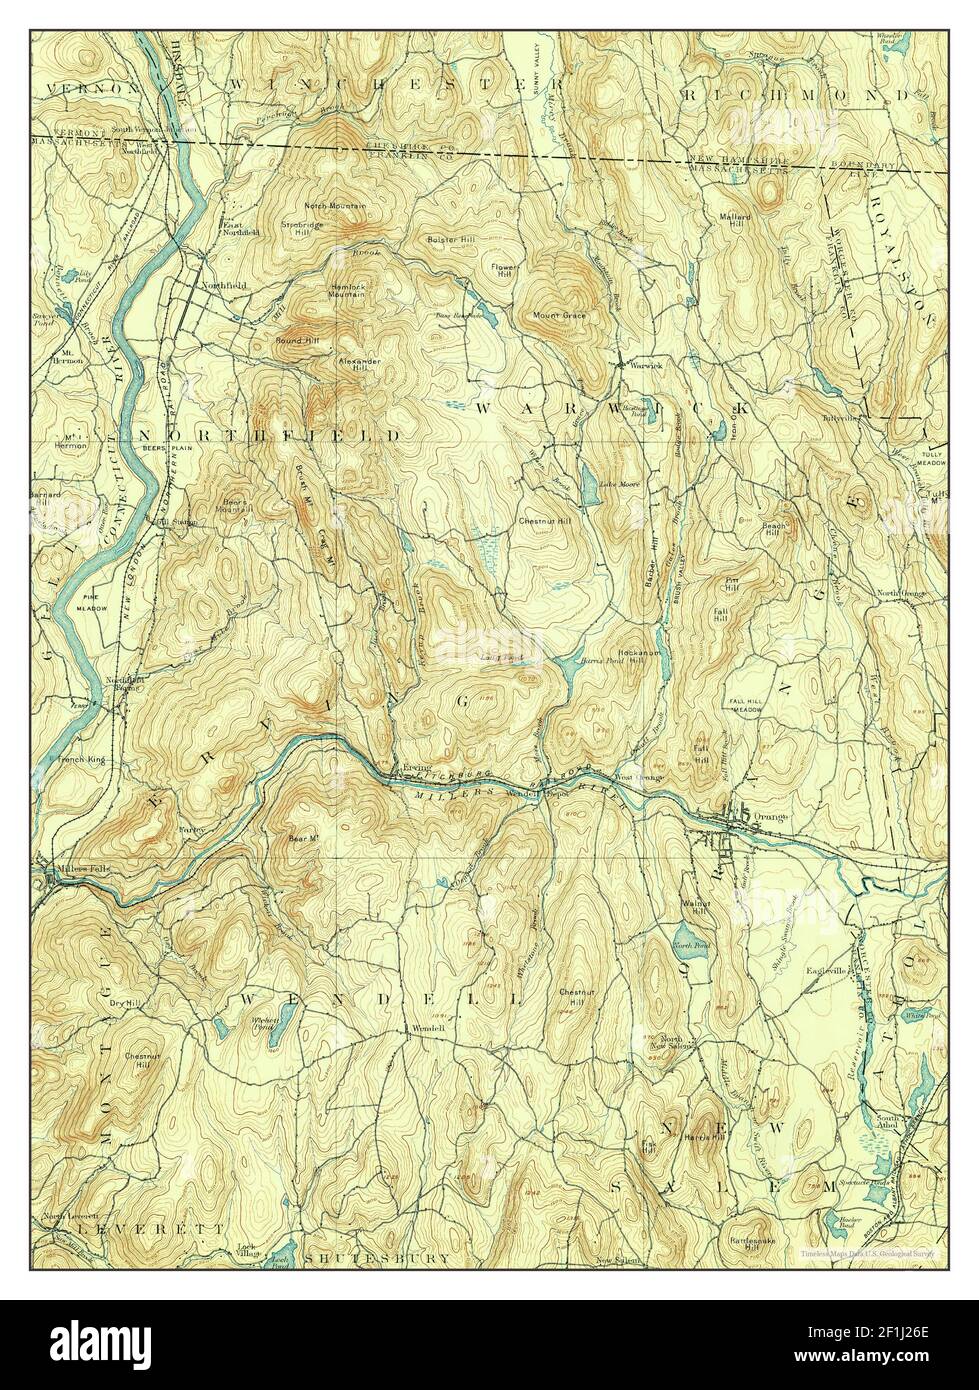 Warwick, Massachusetts, map 1894, 1:62500, United States of America by Timeless Maps, data U.S. Geological Survey Stock Photo